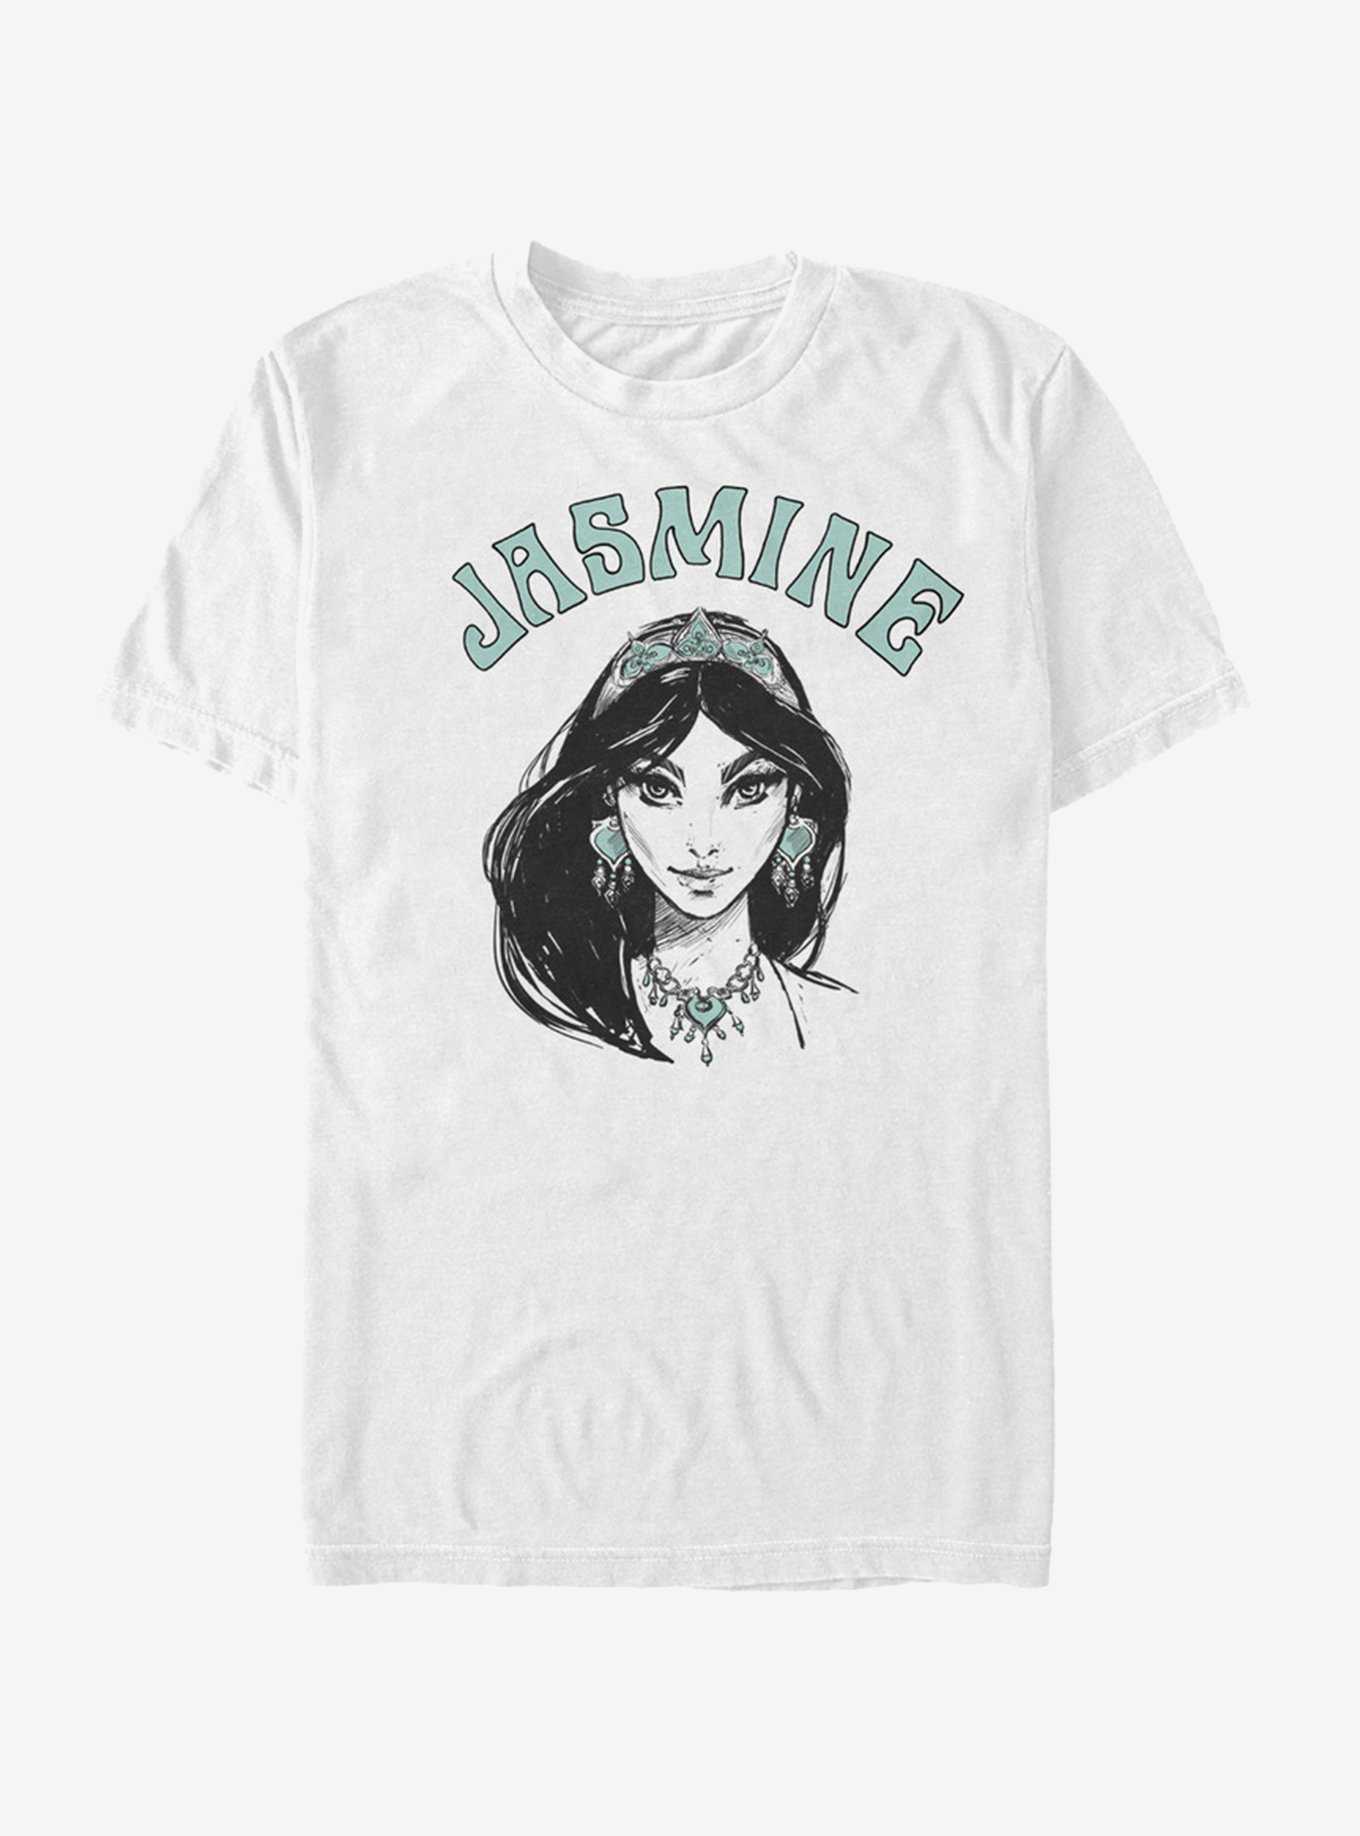 Disney Aladdin 2019 Jasmine T-Shirt, , hi-res